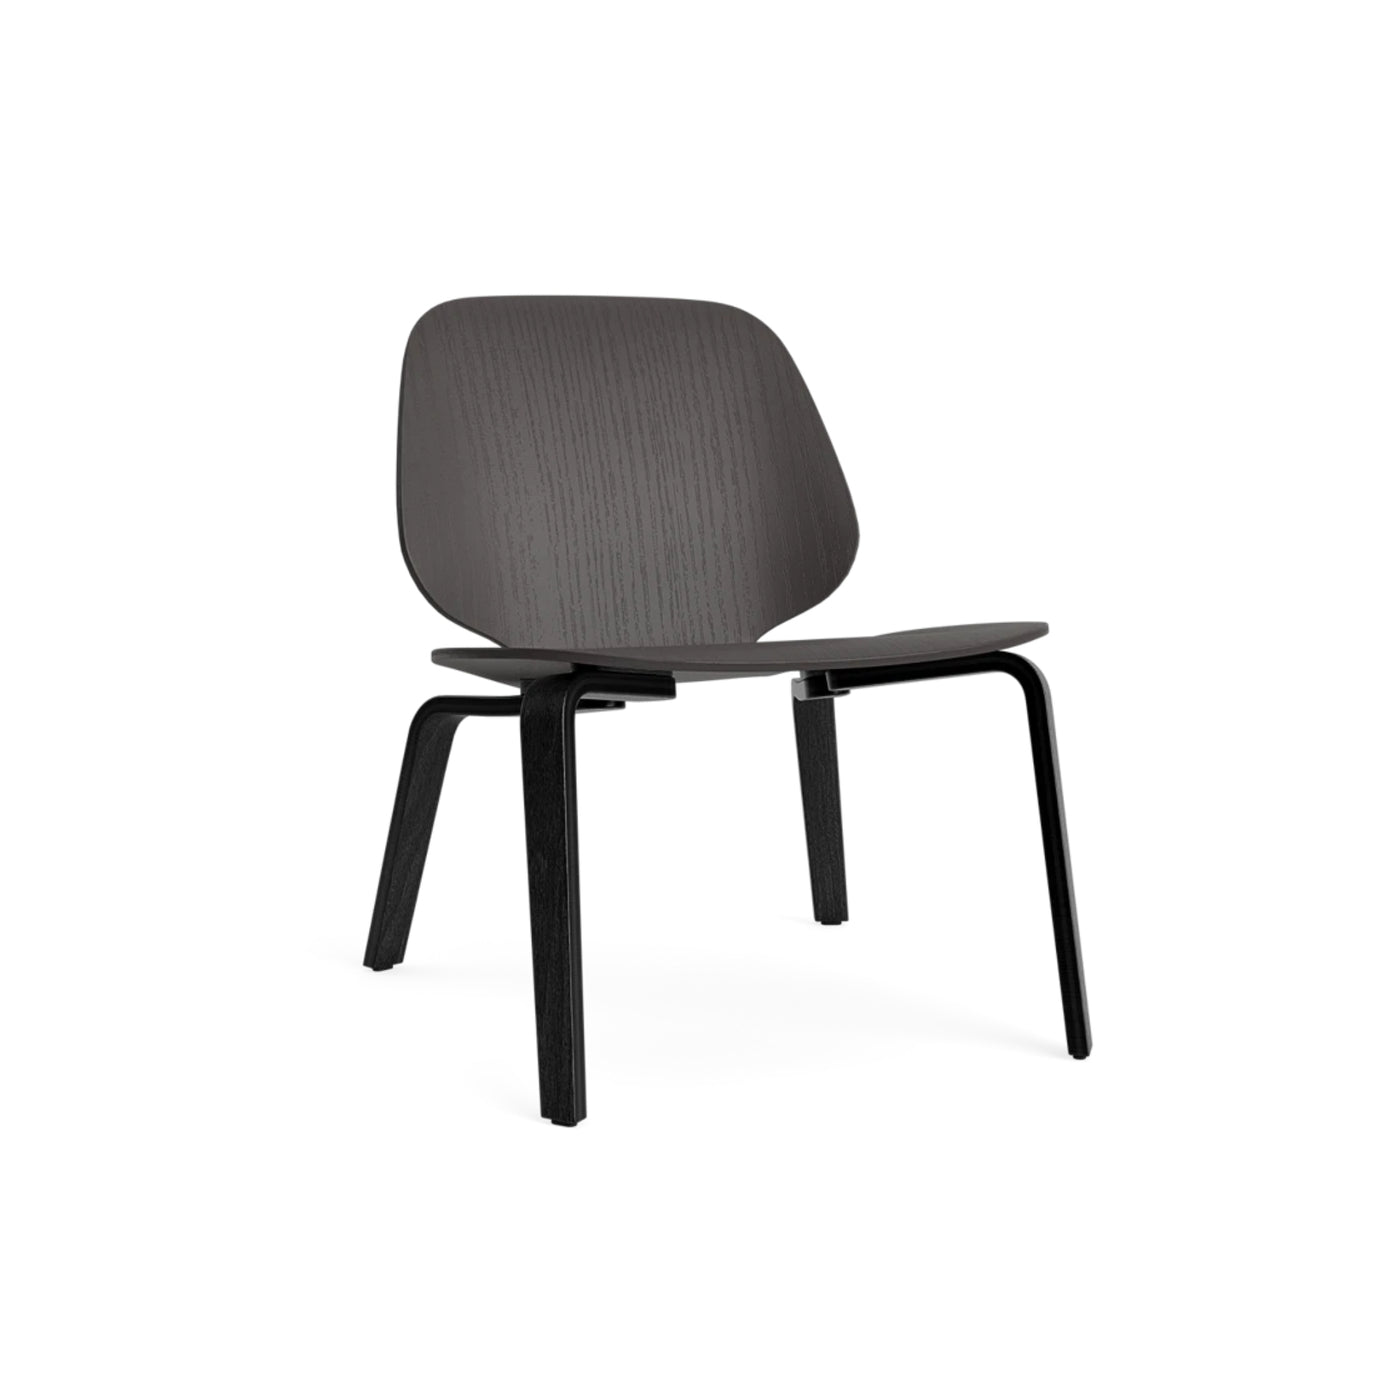 Normann Copenhagen My Chair Lounge. Shop now at someday designs. #colour_black